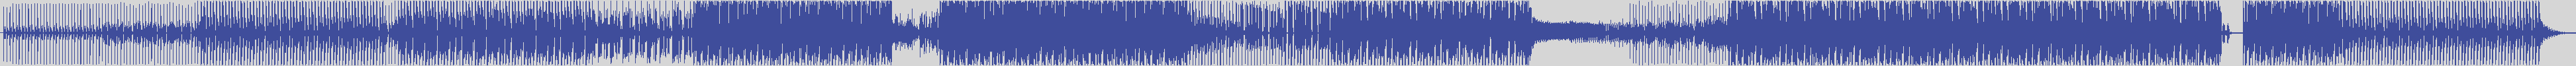 atomic_recordings [AR007] King Bisquit - Sons of P [Original Mix] audio wave form